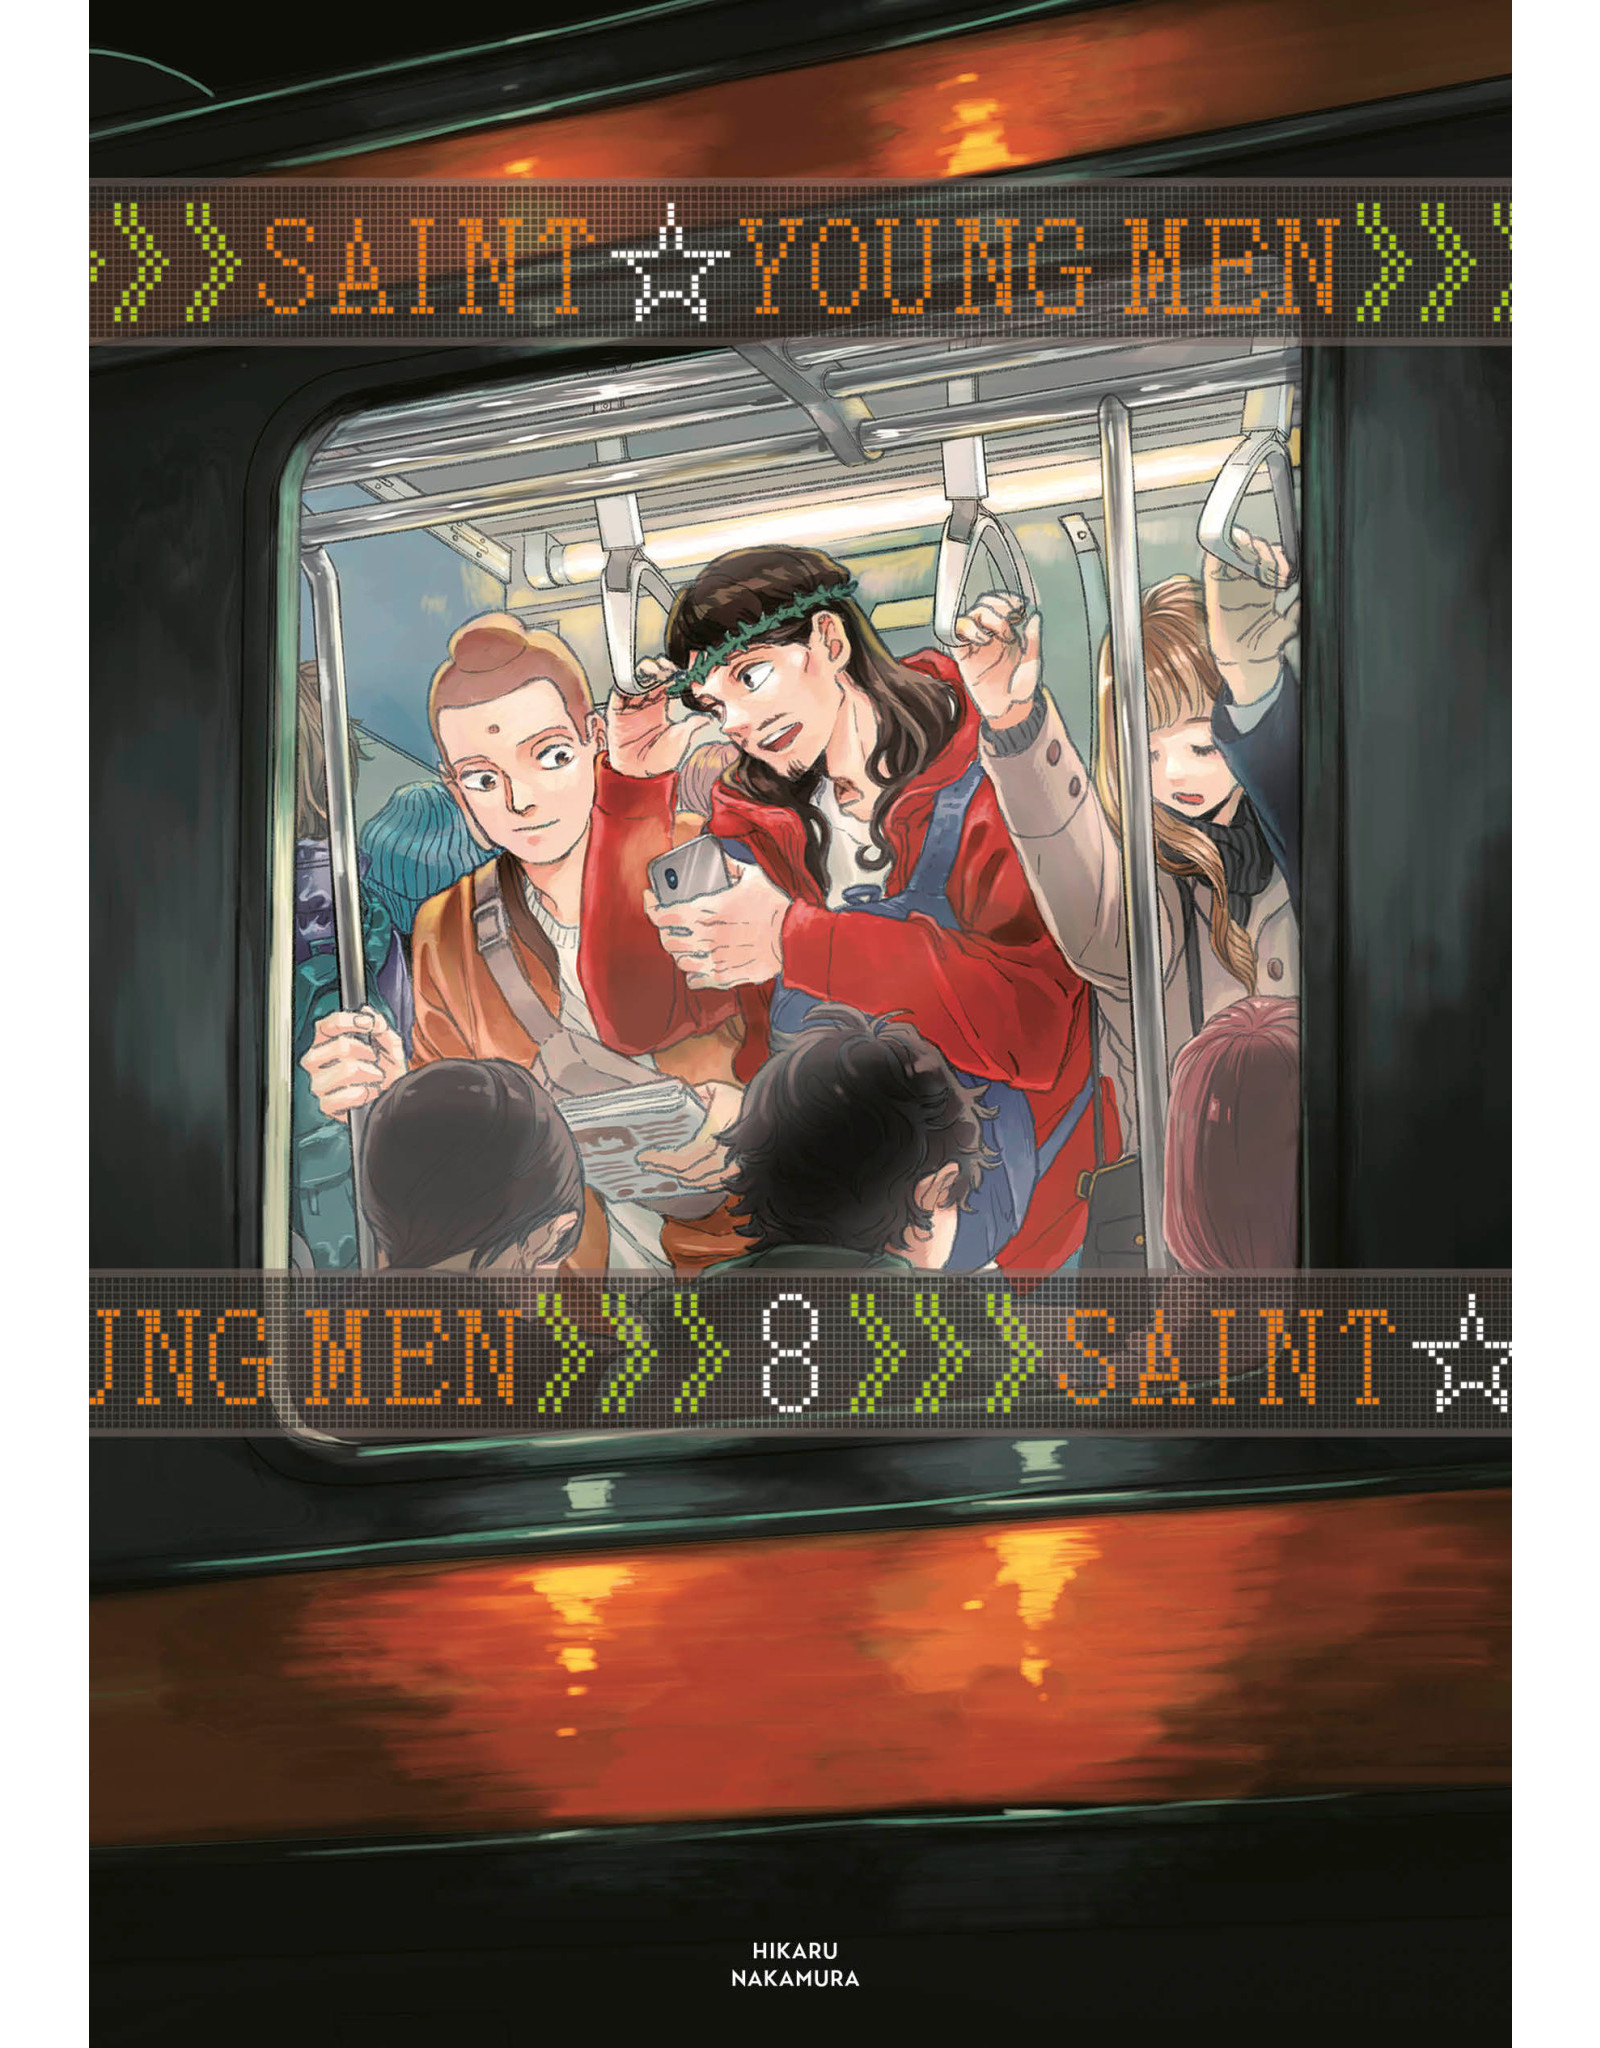 Saint Young Men 08 - Hardcover (Engelstalig) - Manga